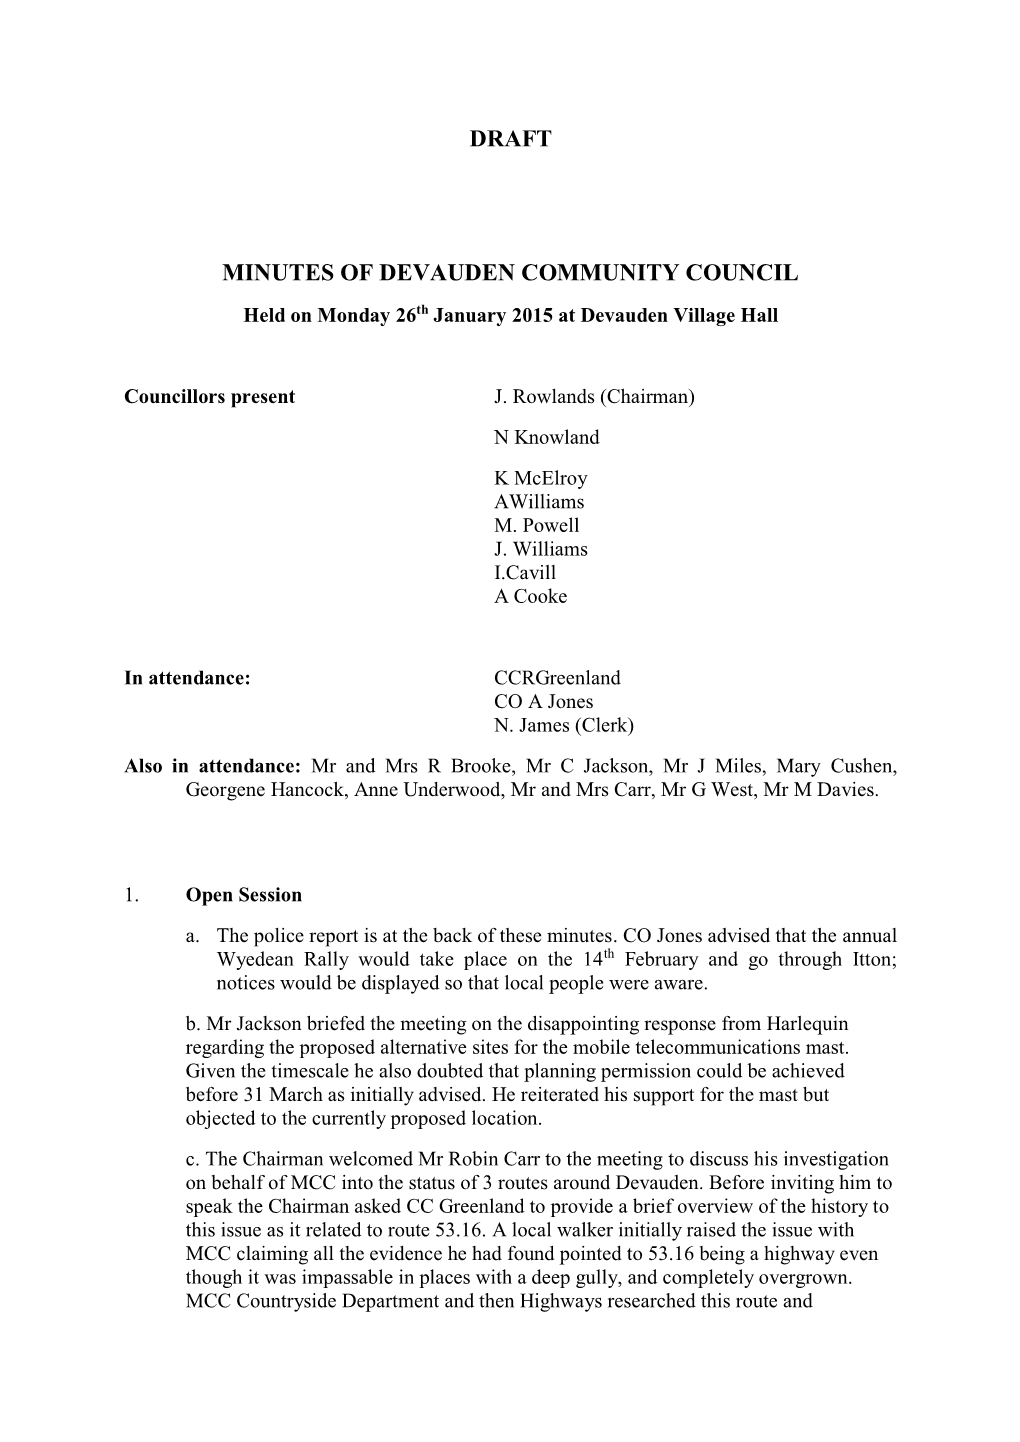 Draft Minutes of Devauden Community Council